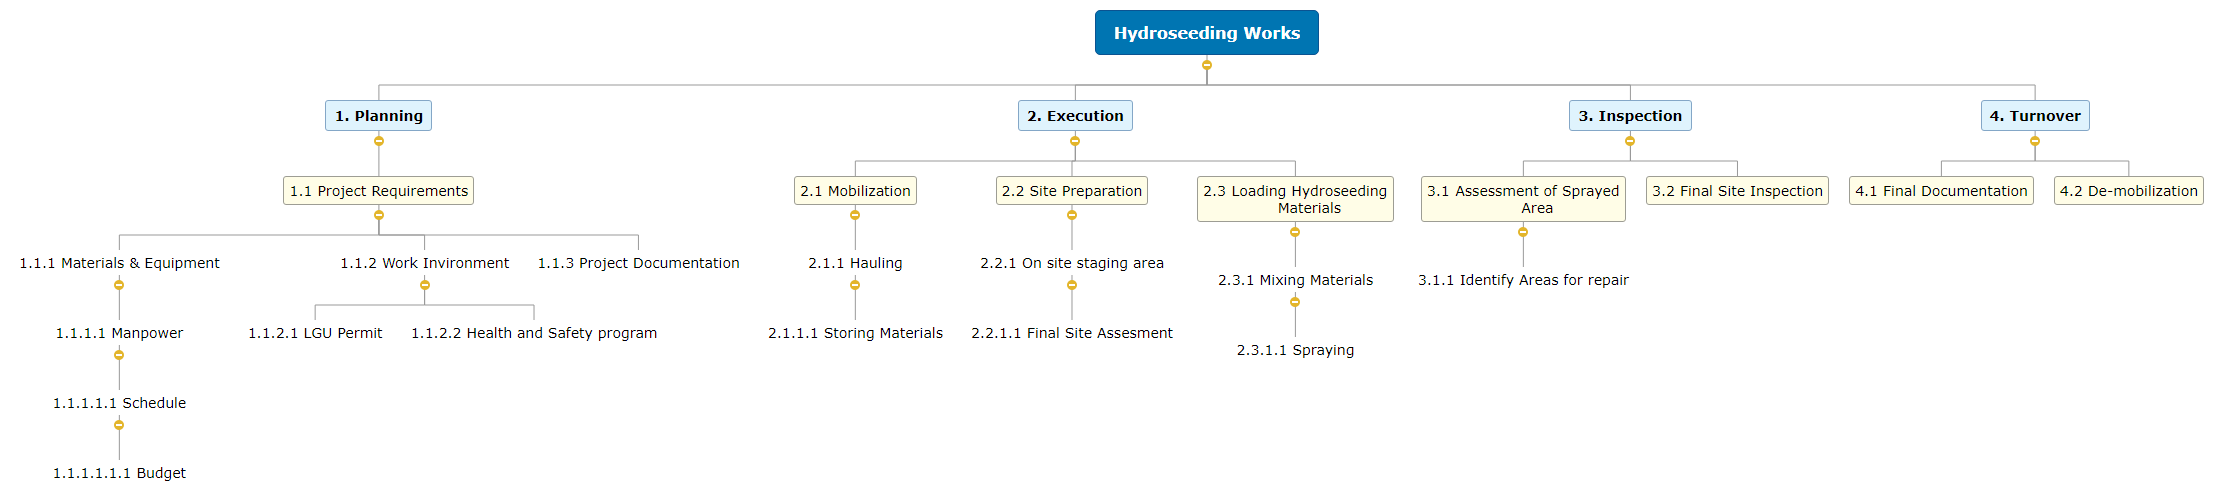 Hydroseeding Works WBS Mind Map